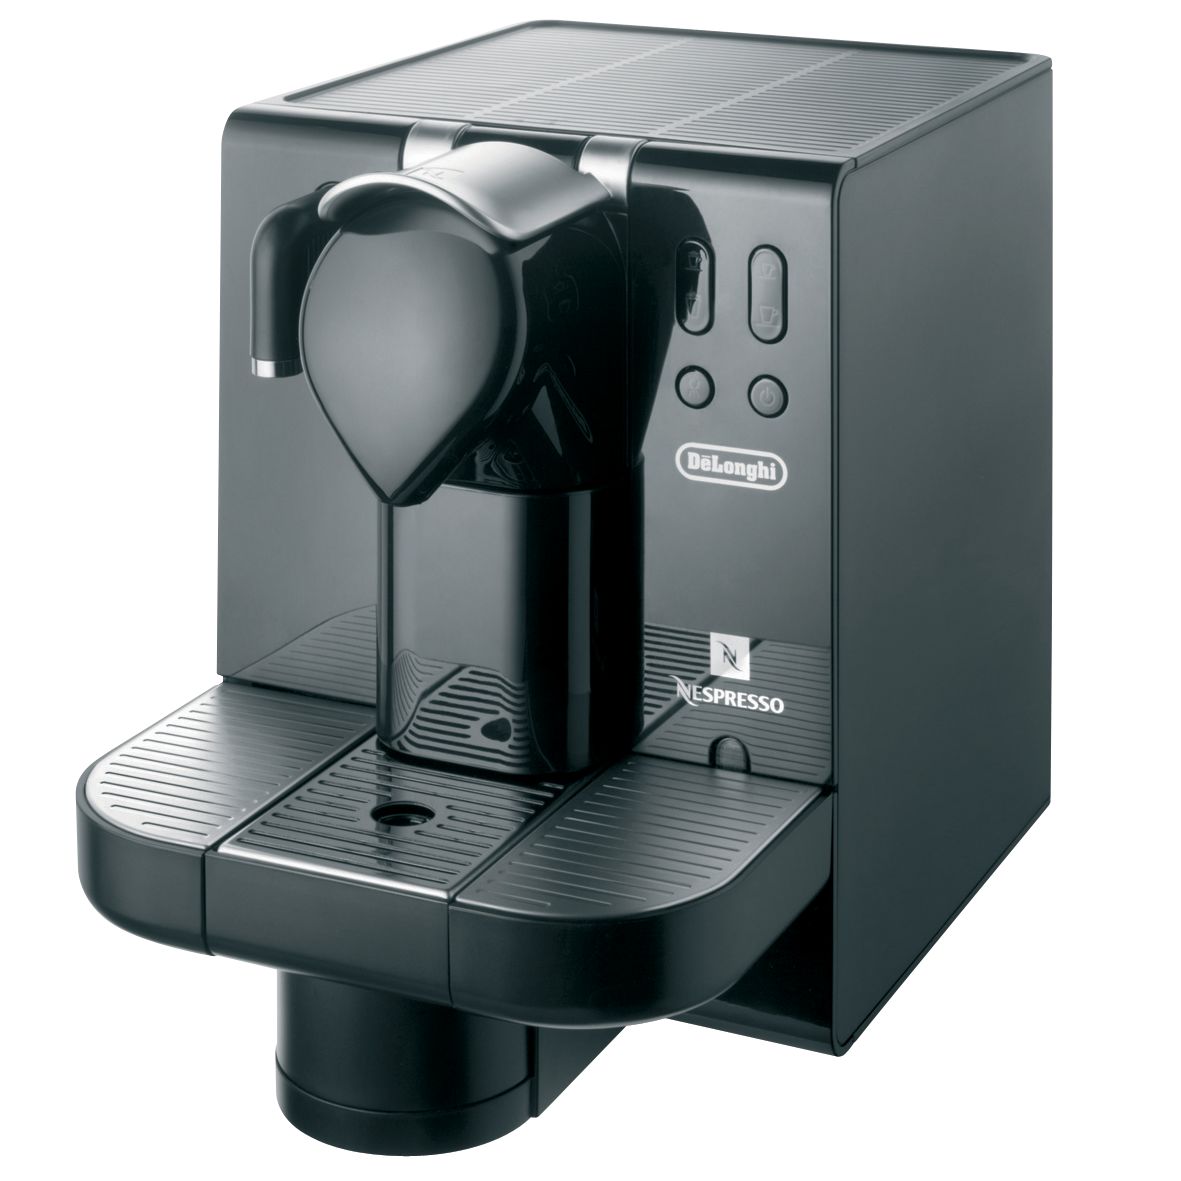 Nespresso EN670B Latissima Coffee Maker by DeLonghi, Black at JohnLewis